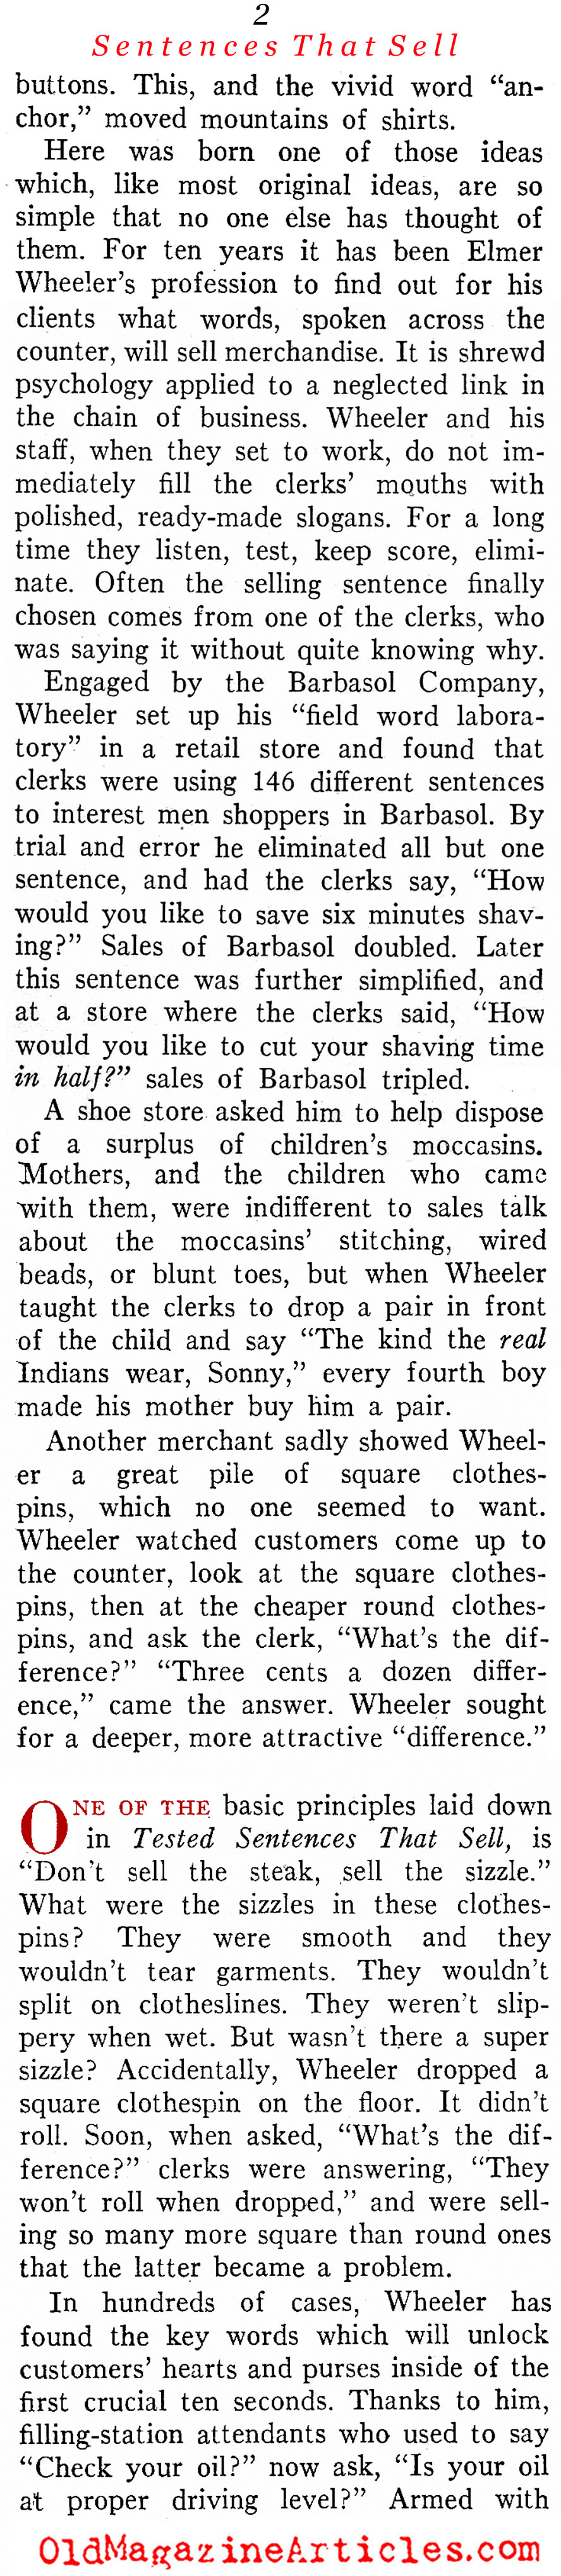 Elmer Wheeler, Word Chemist (Literary Digest, 1938)